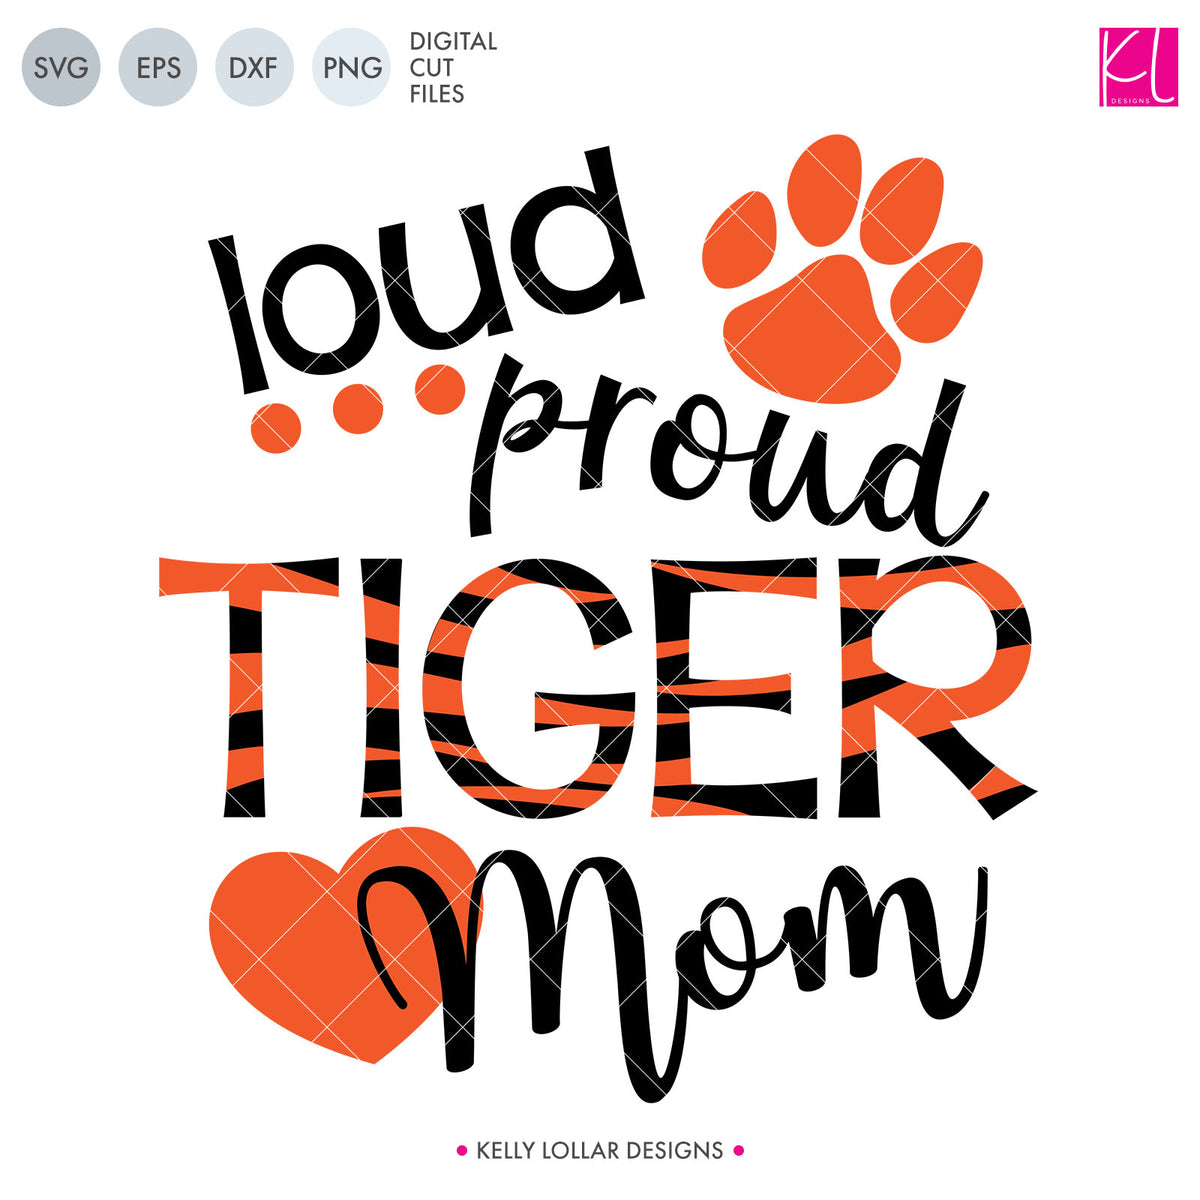 Tigers Mascot Bundle | SVG DXF EPS PNG Cut Files